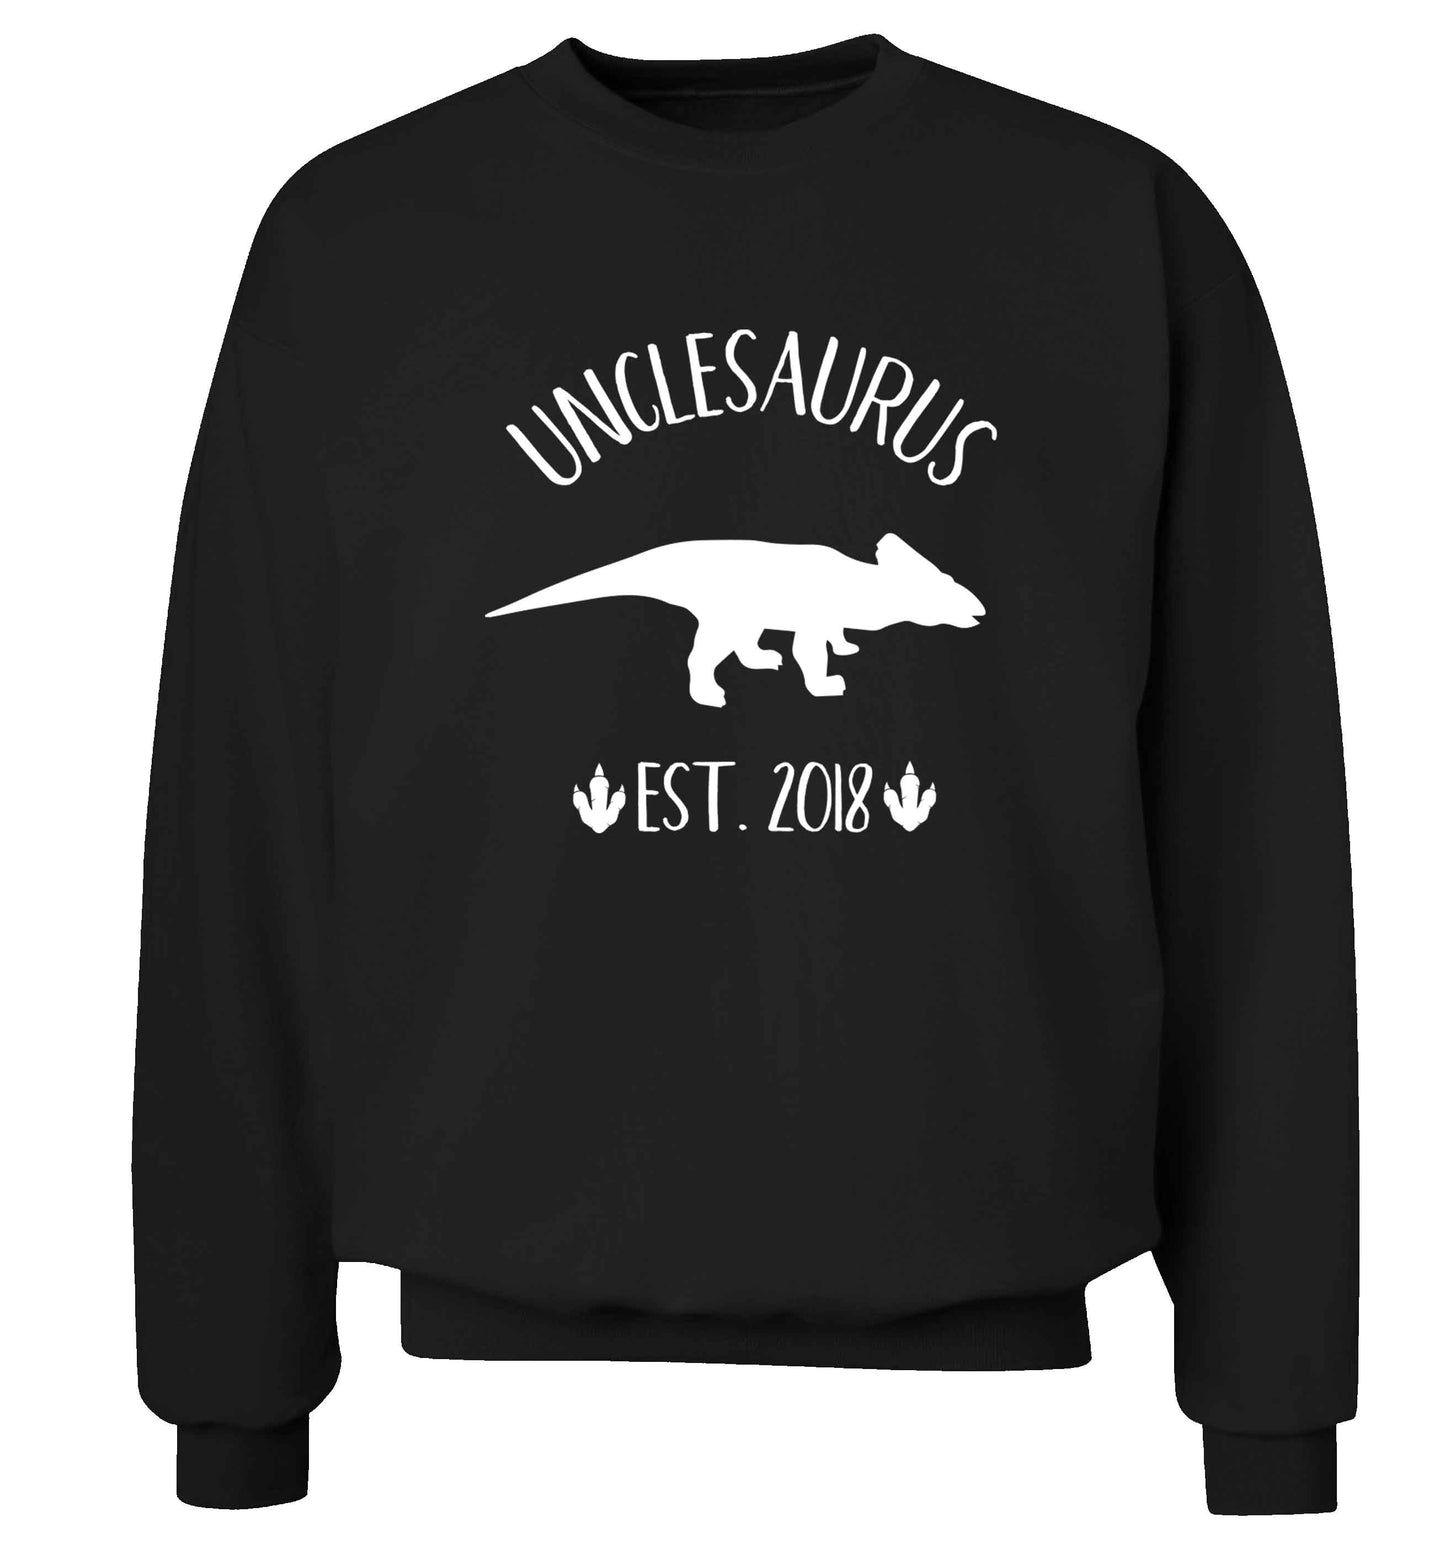 Personalised unclesaurus since (custom date) Adult's unisex black Sweater 2XL